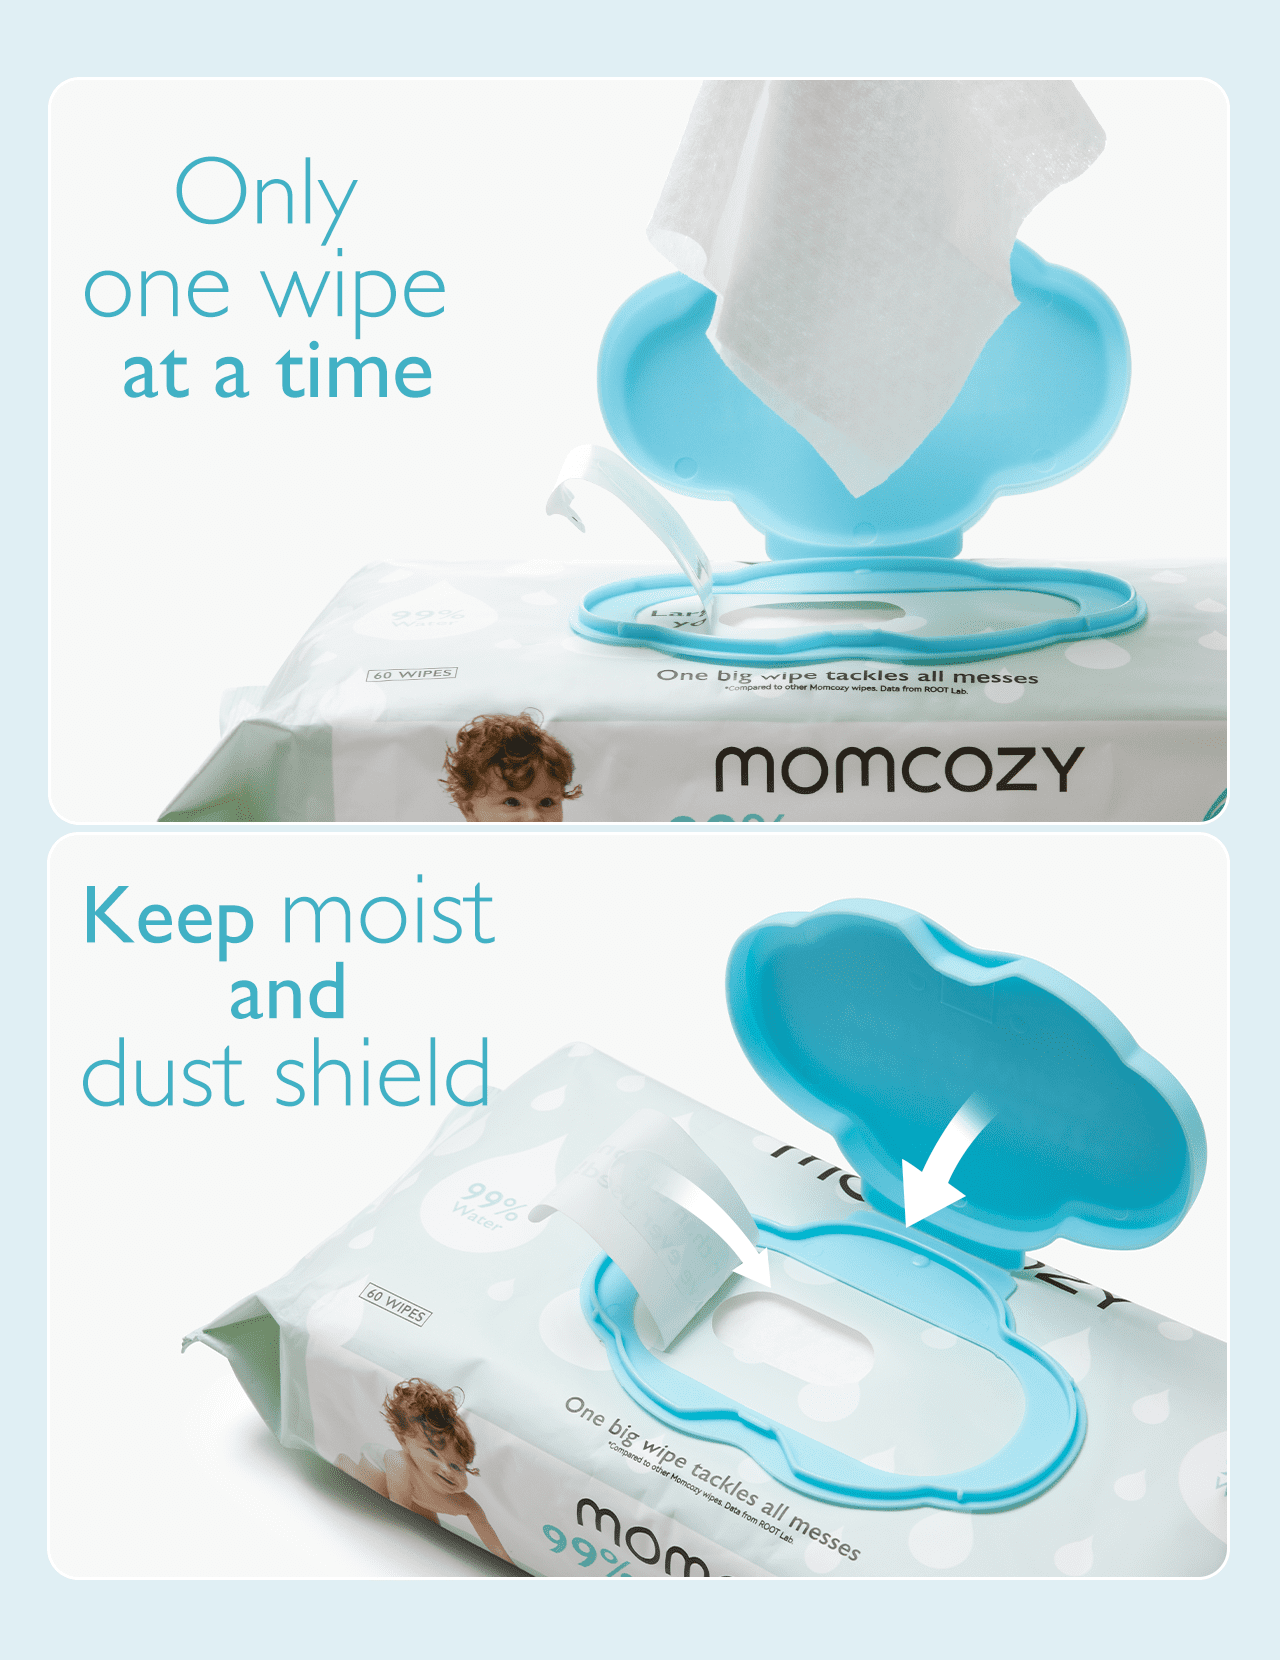 momcozy 99% purified water wipes!#purifiedwaterwipes #momcozy